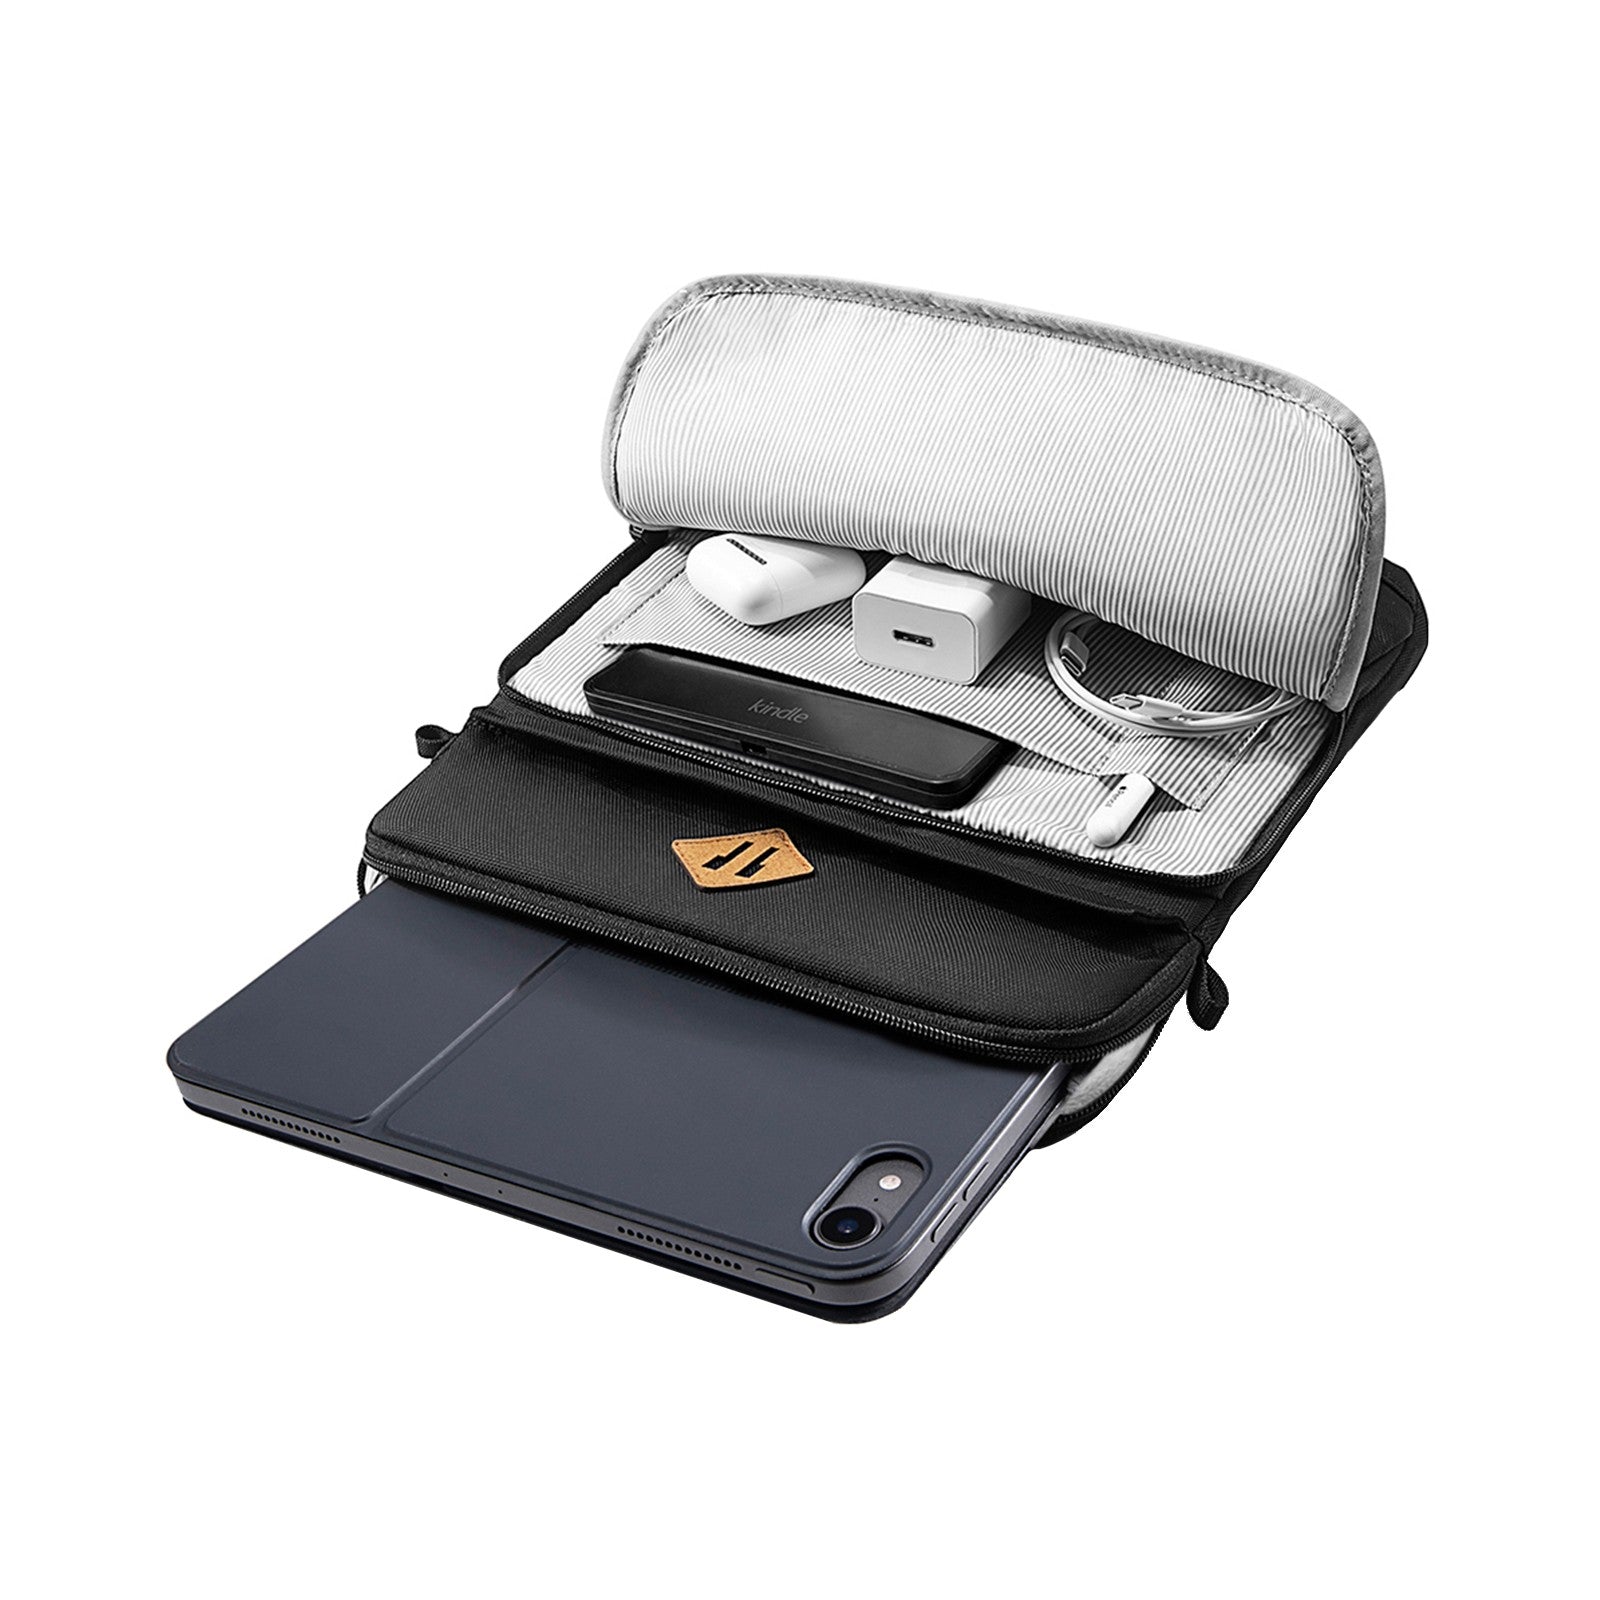 iPad Sleeve, Headset Bag and Daily Protective Case - MYGOFLIGHT